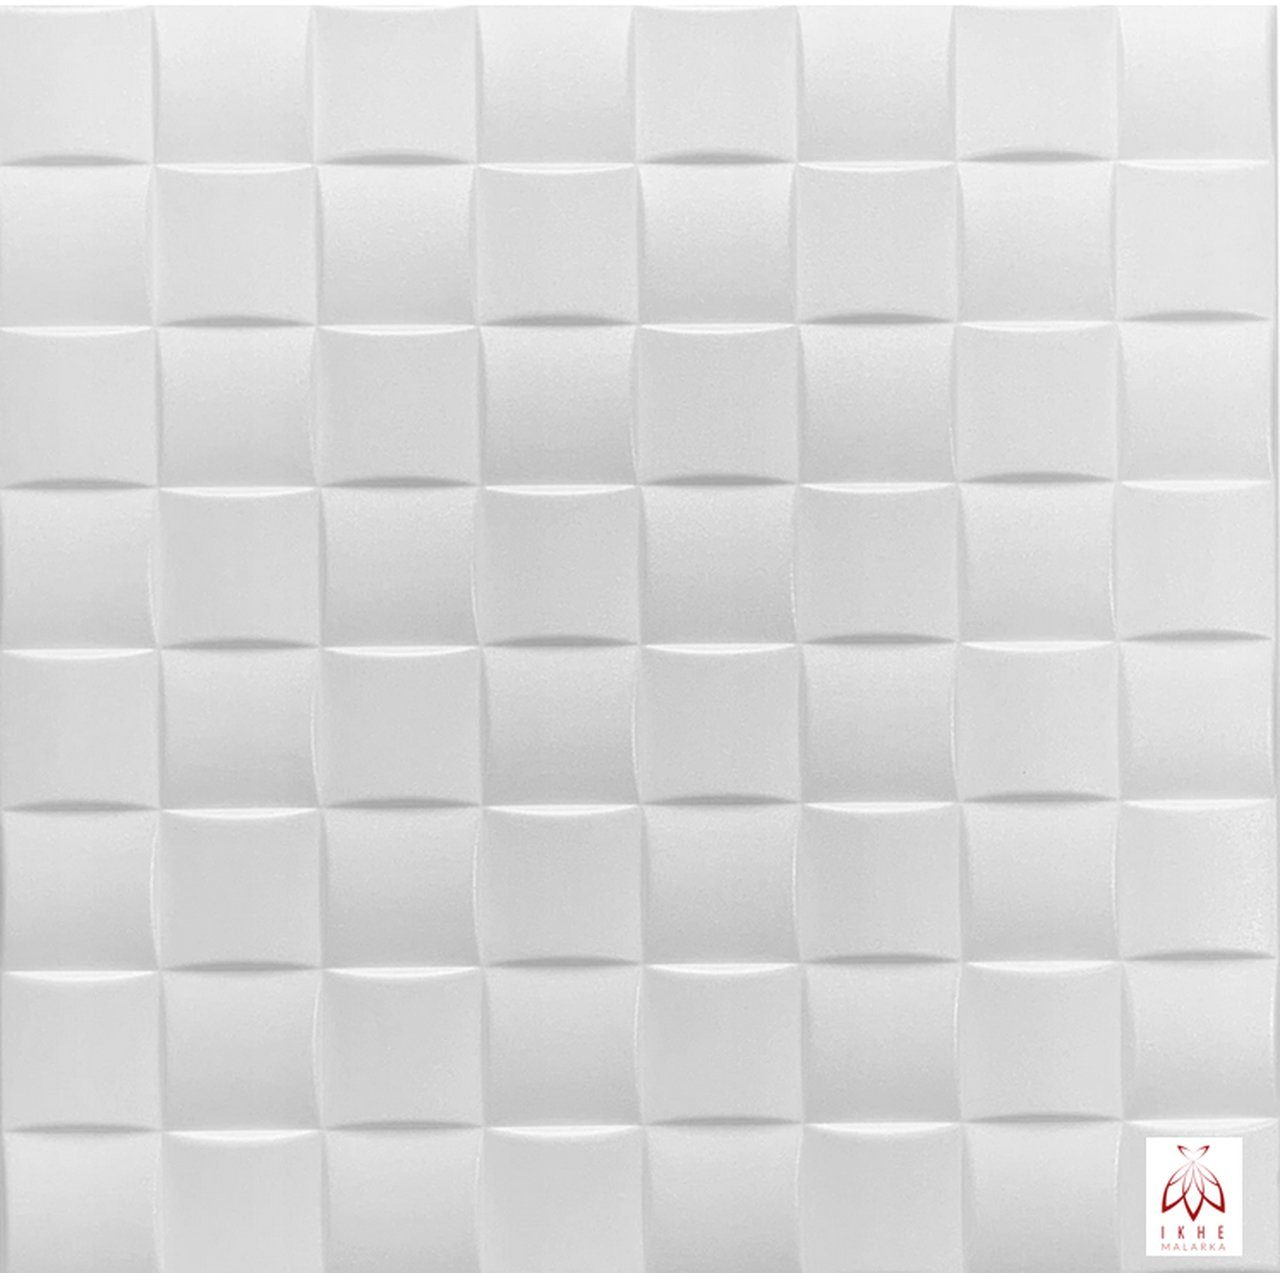 IKHEMalarka 3D Wandpaneel Polystyrol Deckenpaneele 2mm stark Dekoren, BxL: 50,00x50,00 cm, 0,25 qm, (Platten XPS, Polystyrol Paneele) 2m² = 8 Stück 0816